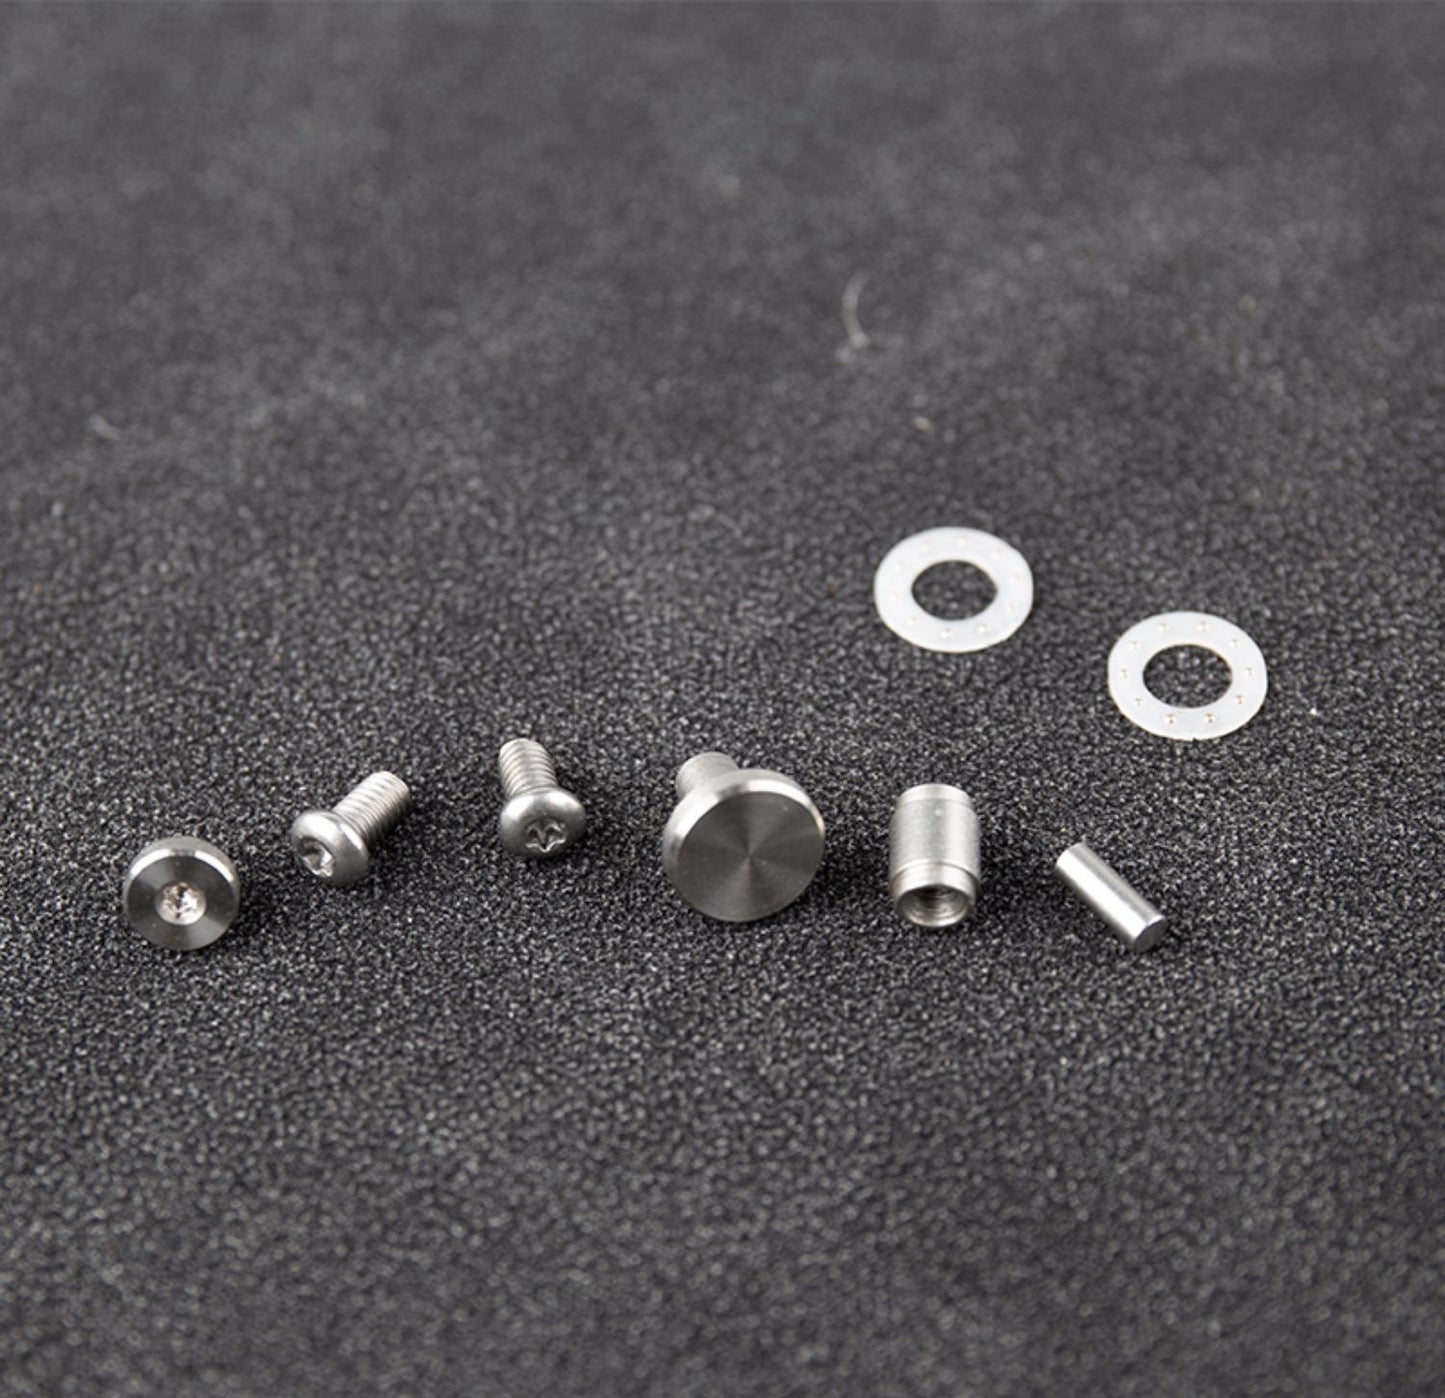 OLITANS Pocket Knife Parts, ball bearings, Pivot, Pocket Clip